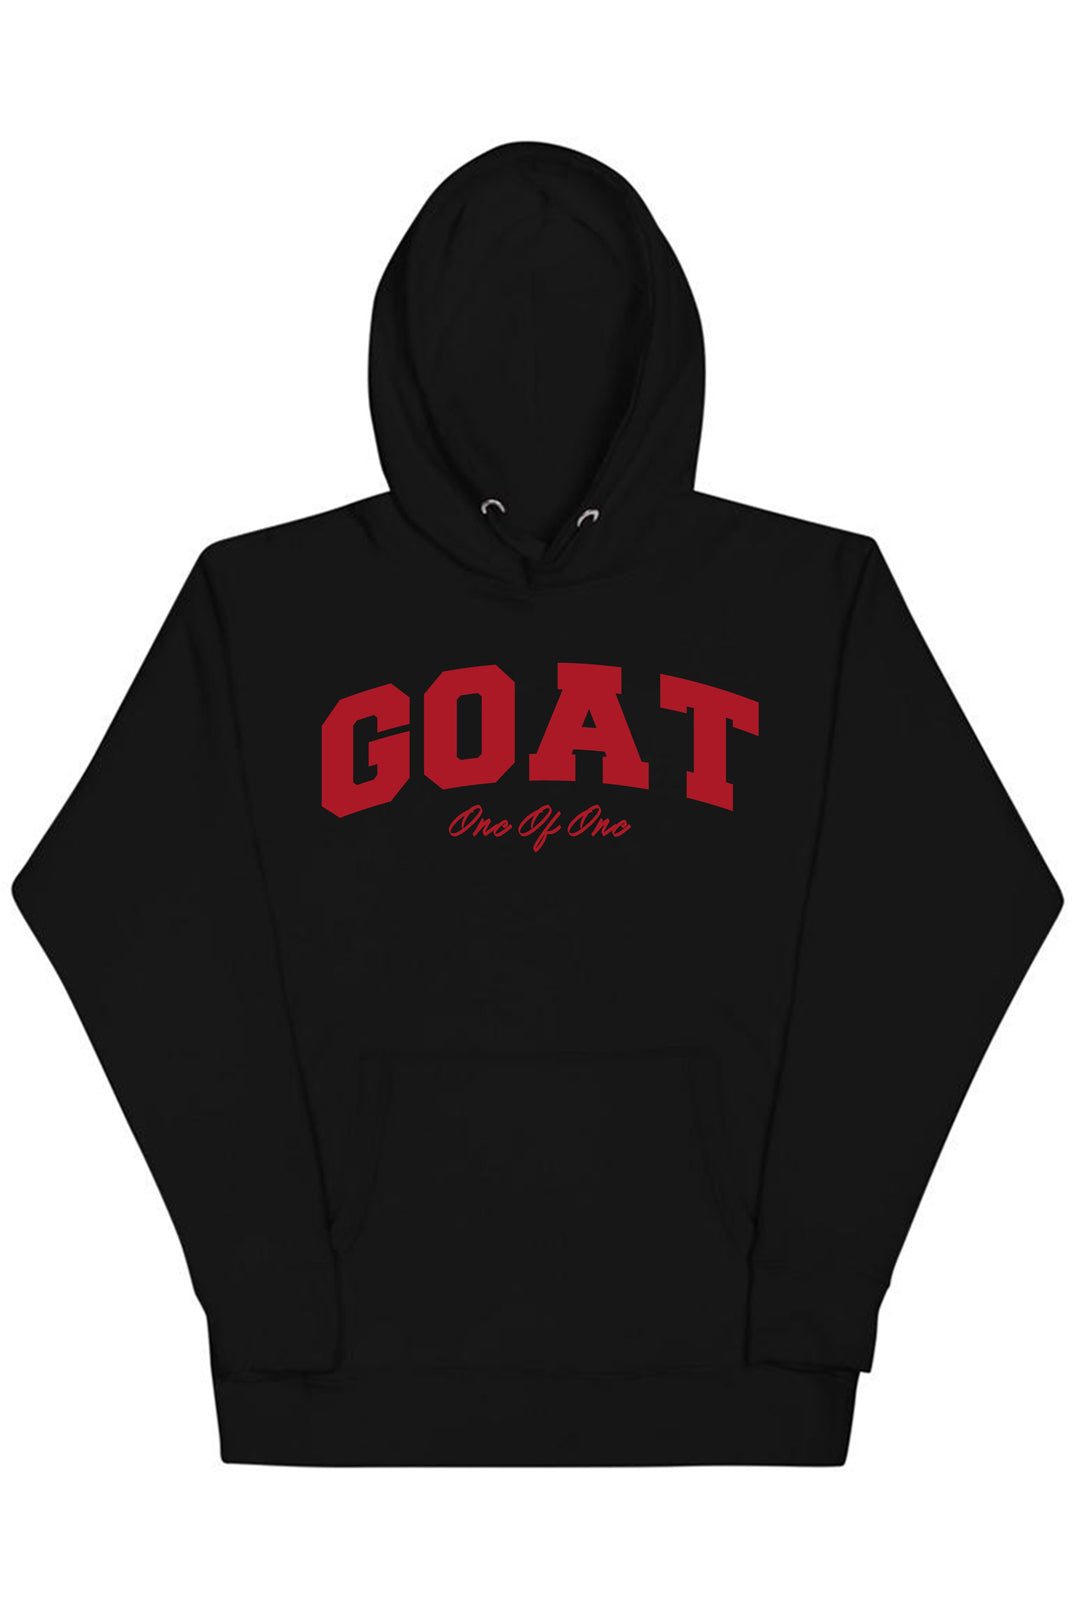 Goat Hoodie (Red Logo - Zamage